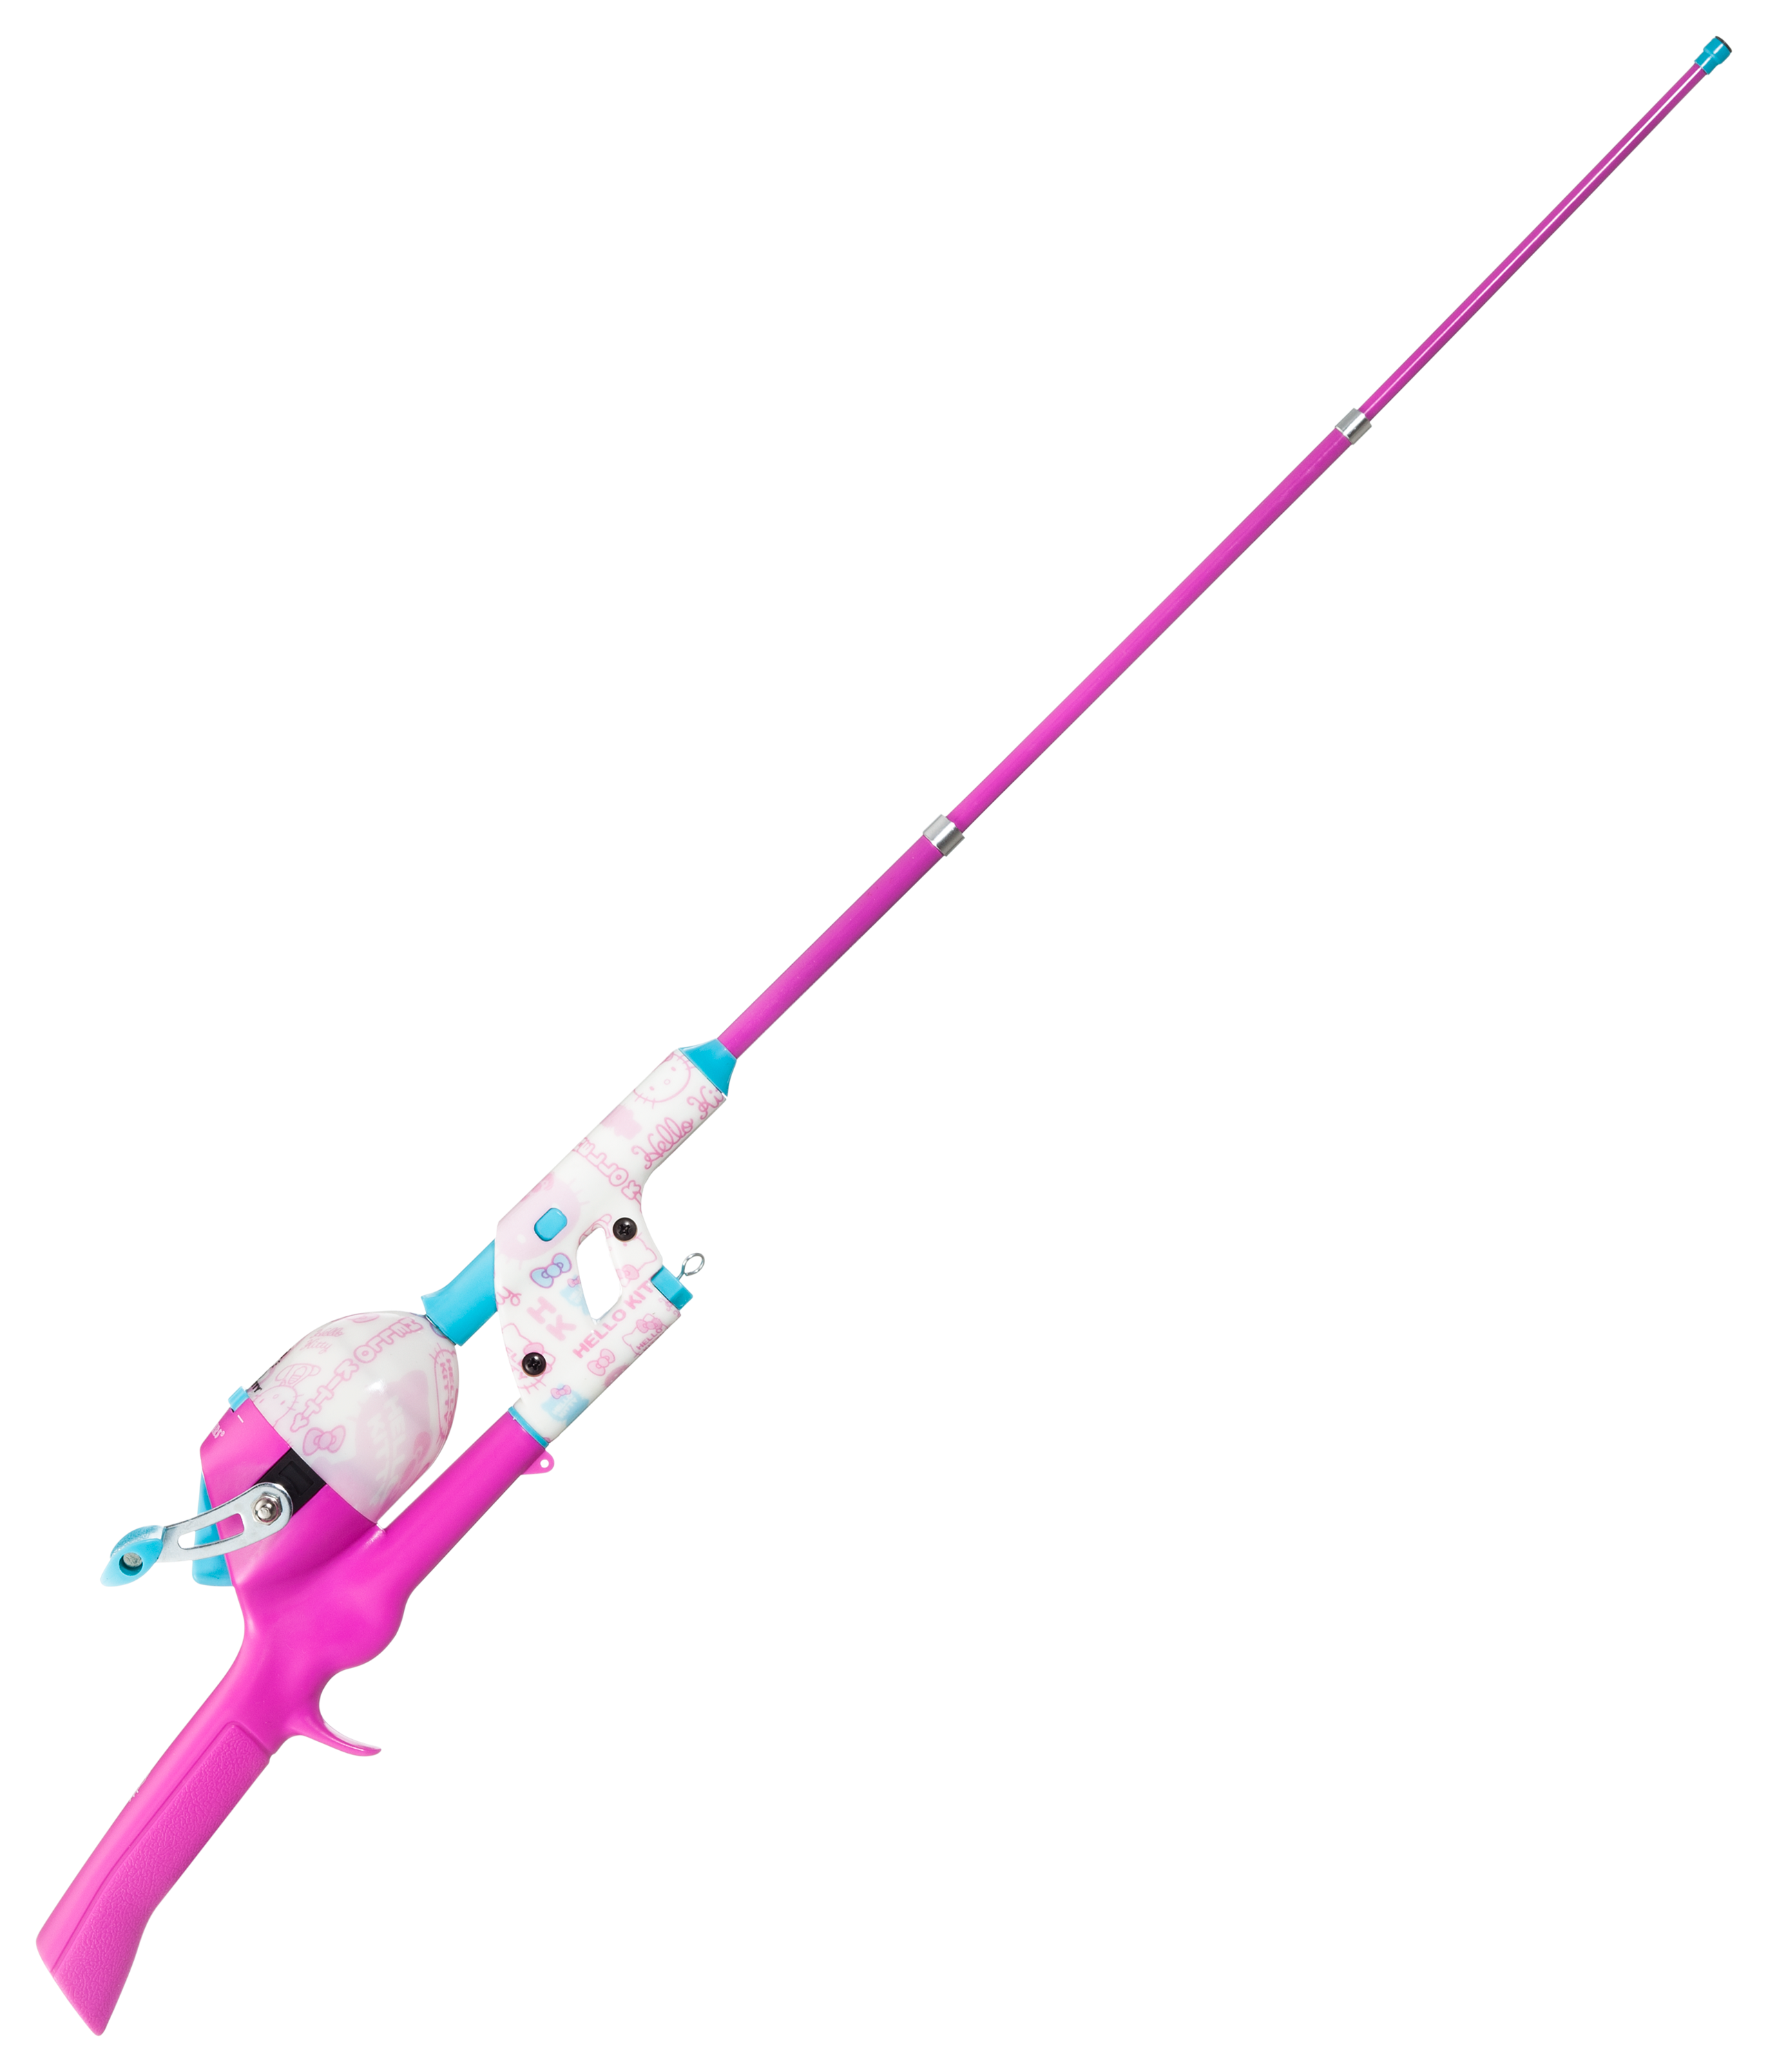 Lil' Angler Hello Kitty Tangle-Free Telescopic Fishing Rod and Reel Combo